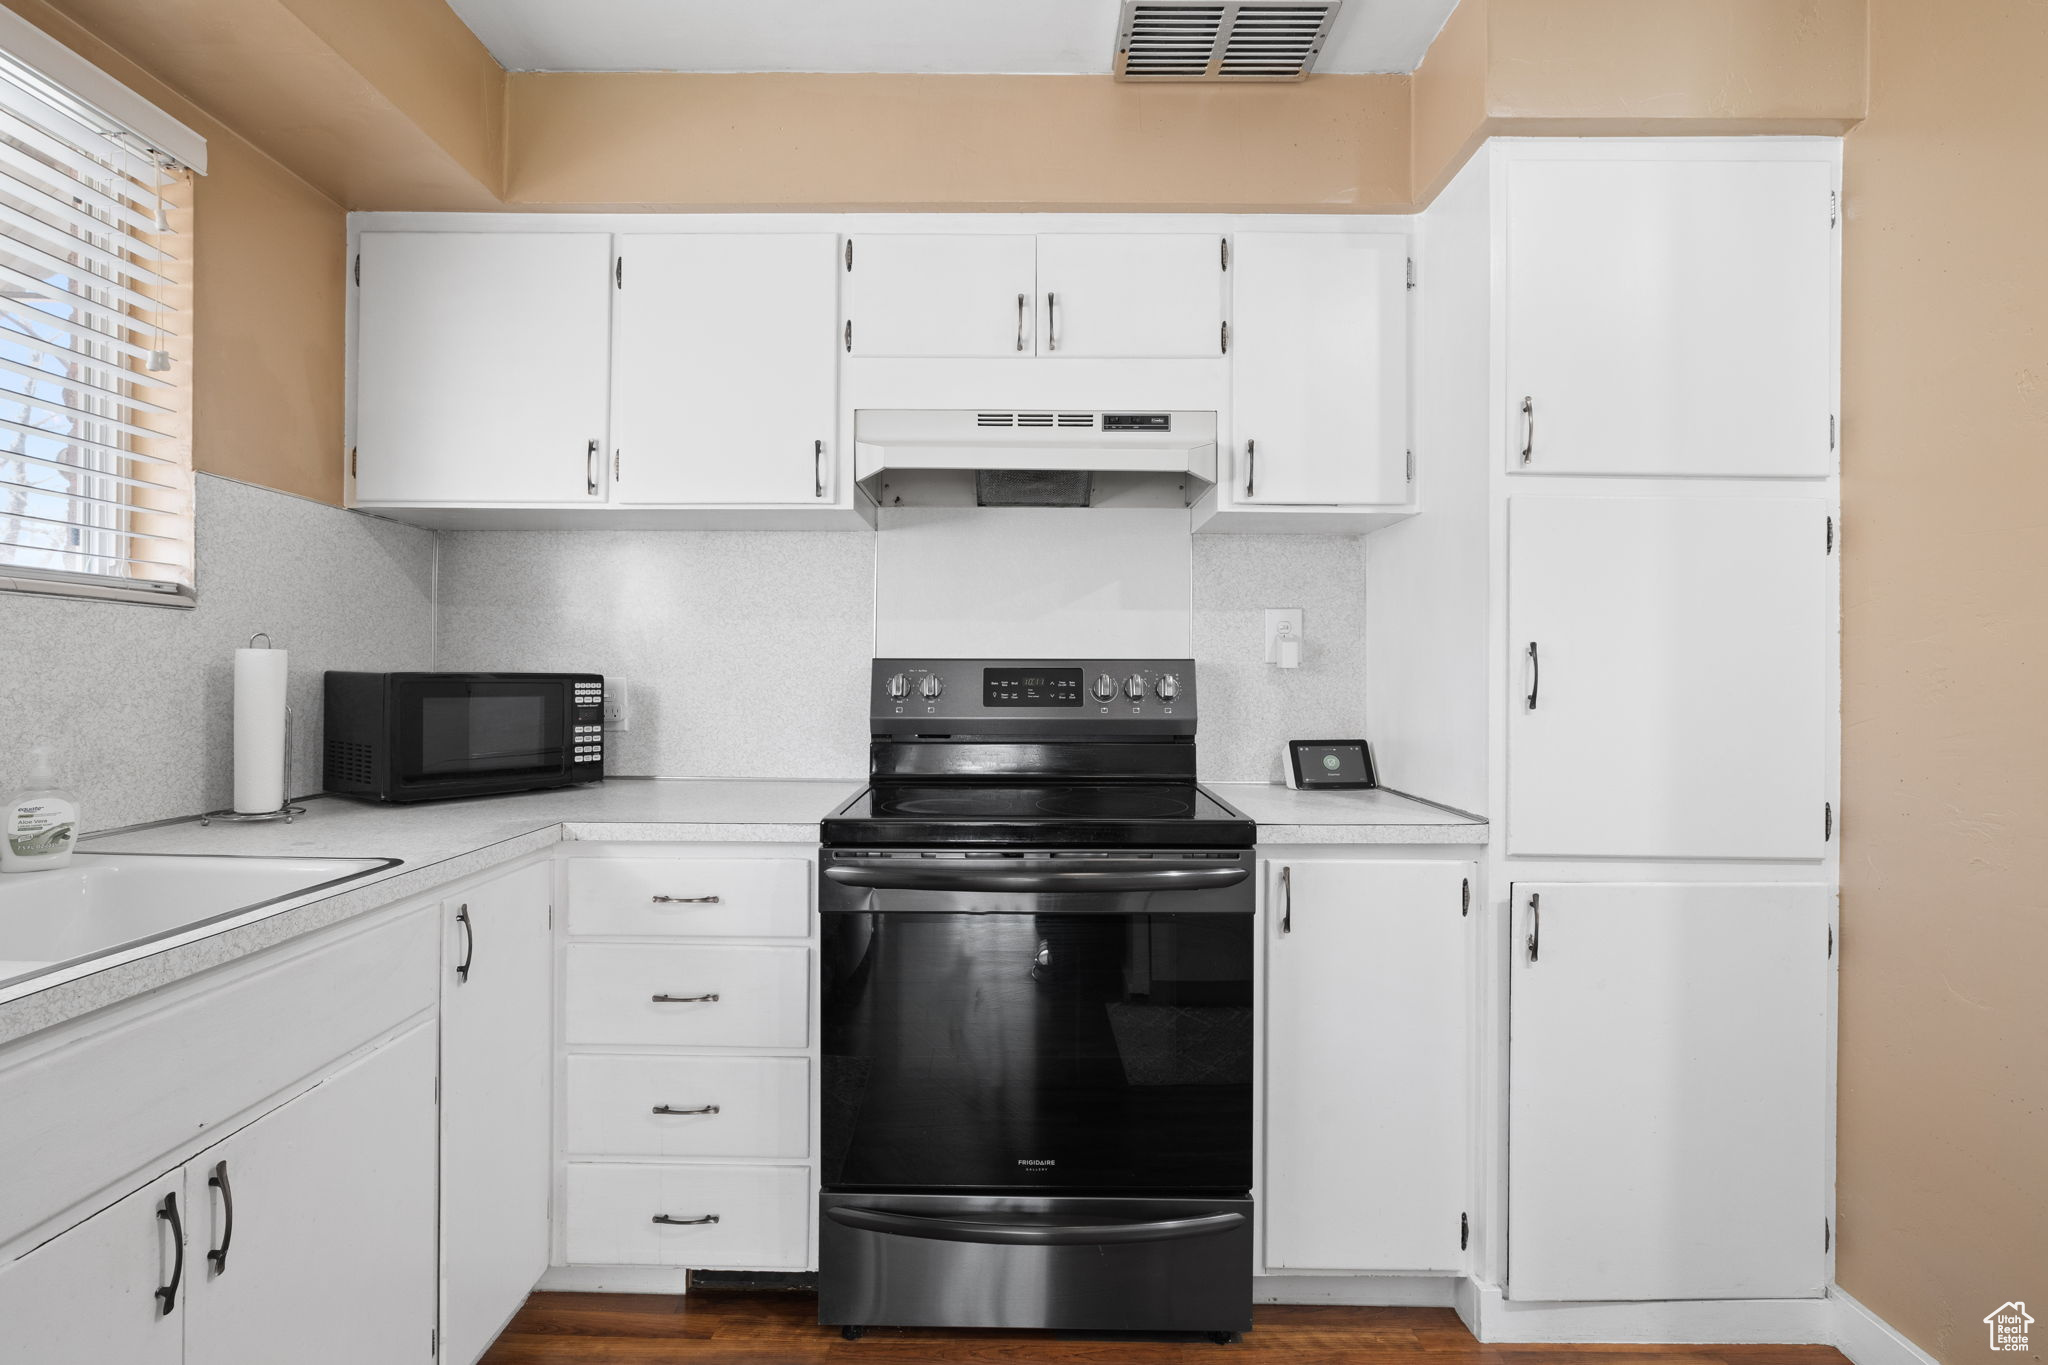 Kitchen with dark hardwood / wood-style floors, custom range hood, black appliances, and white cabinetry